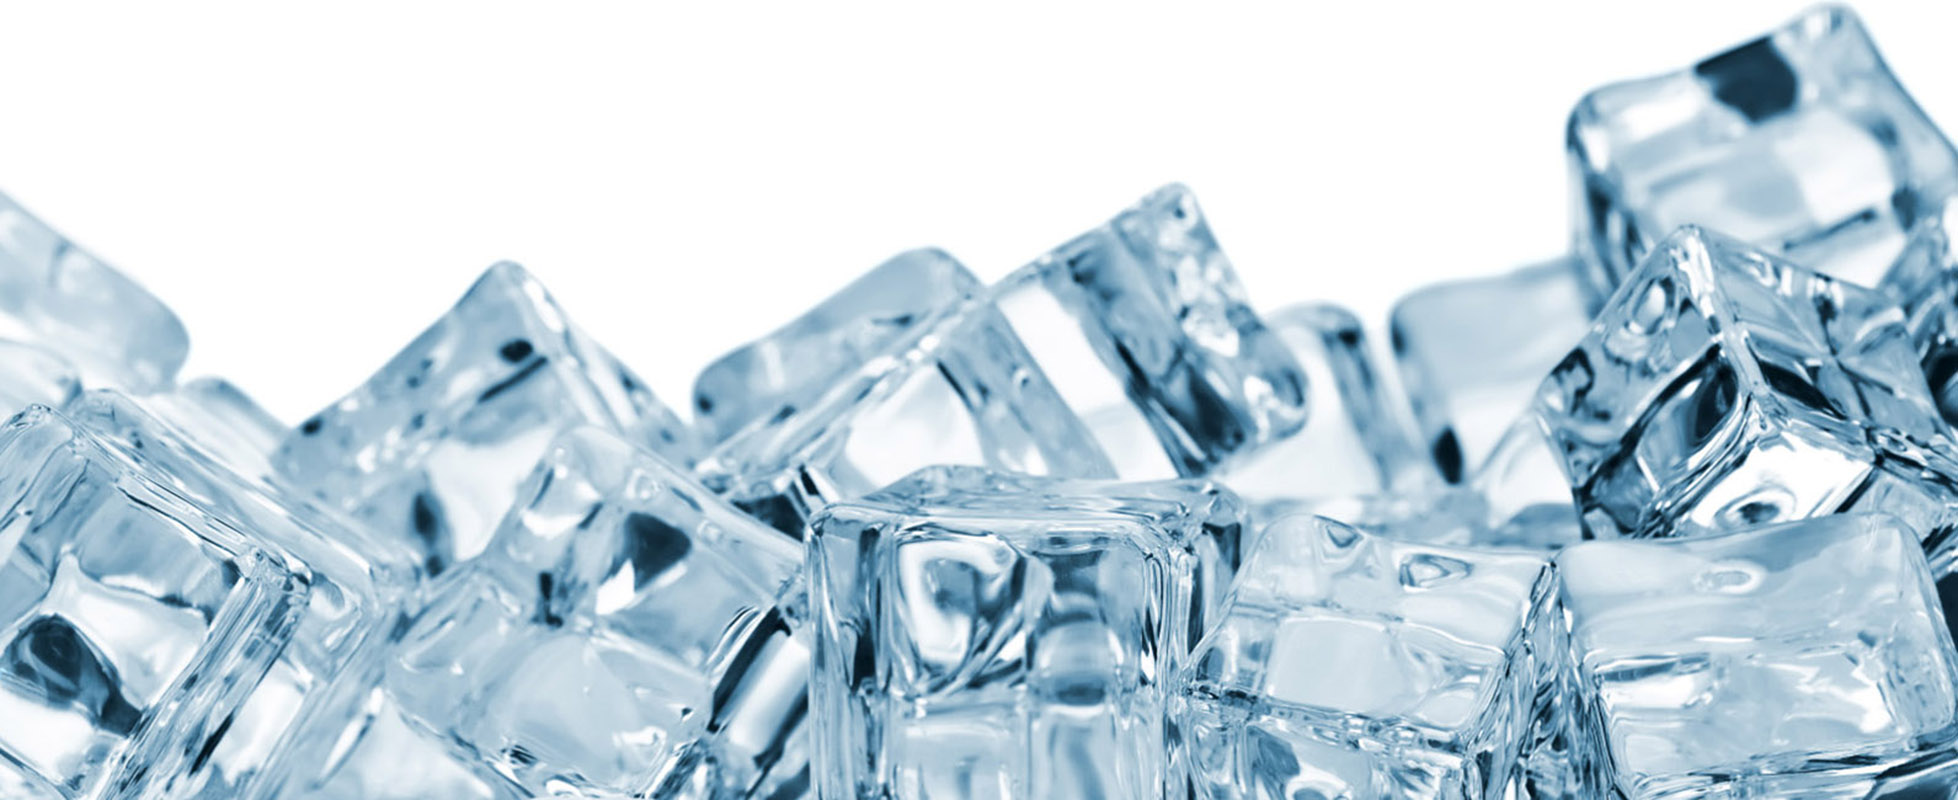 Кубики льда без фона